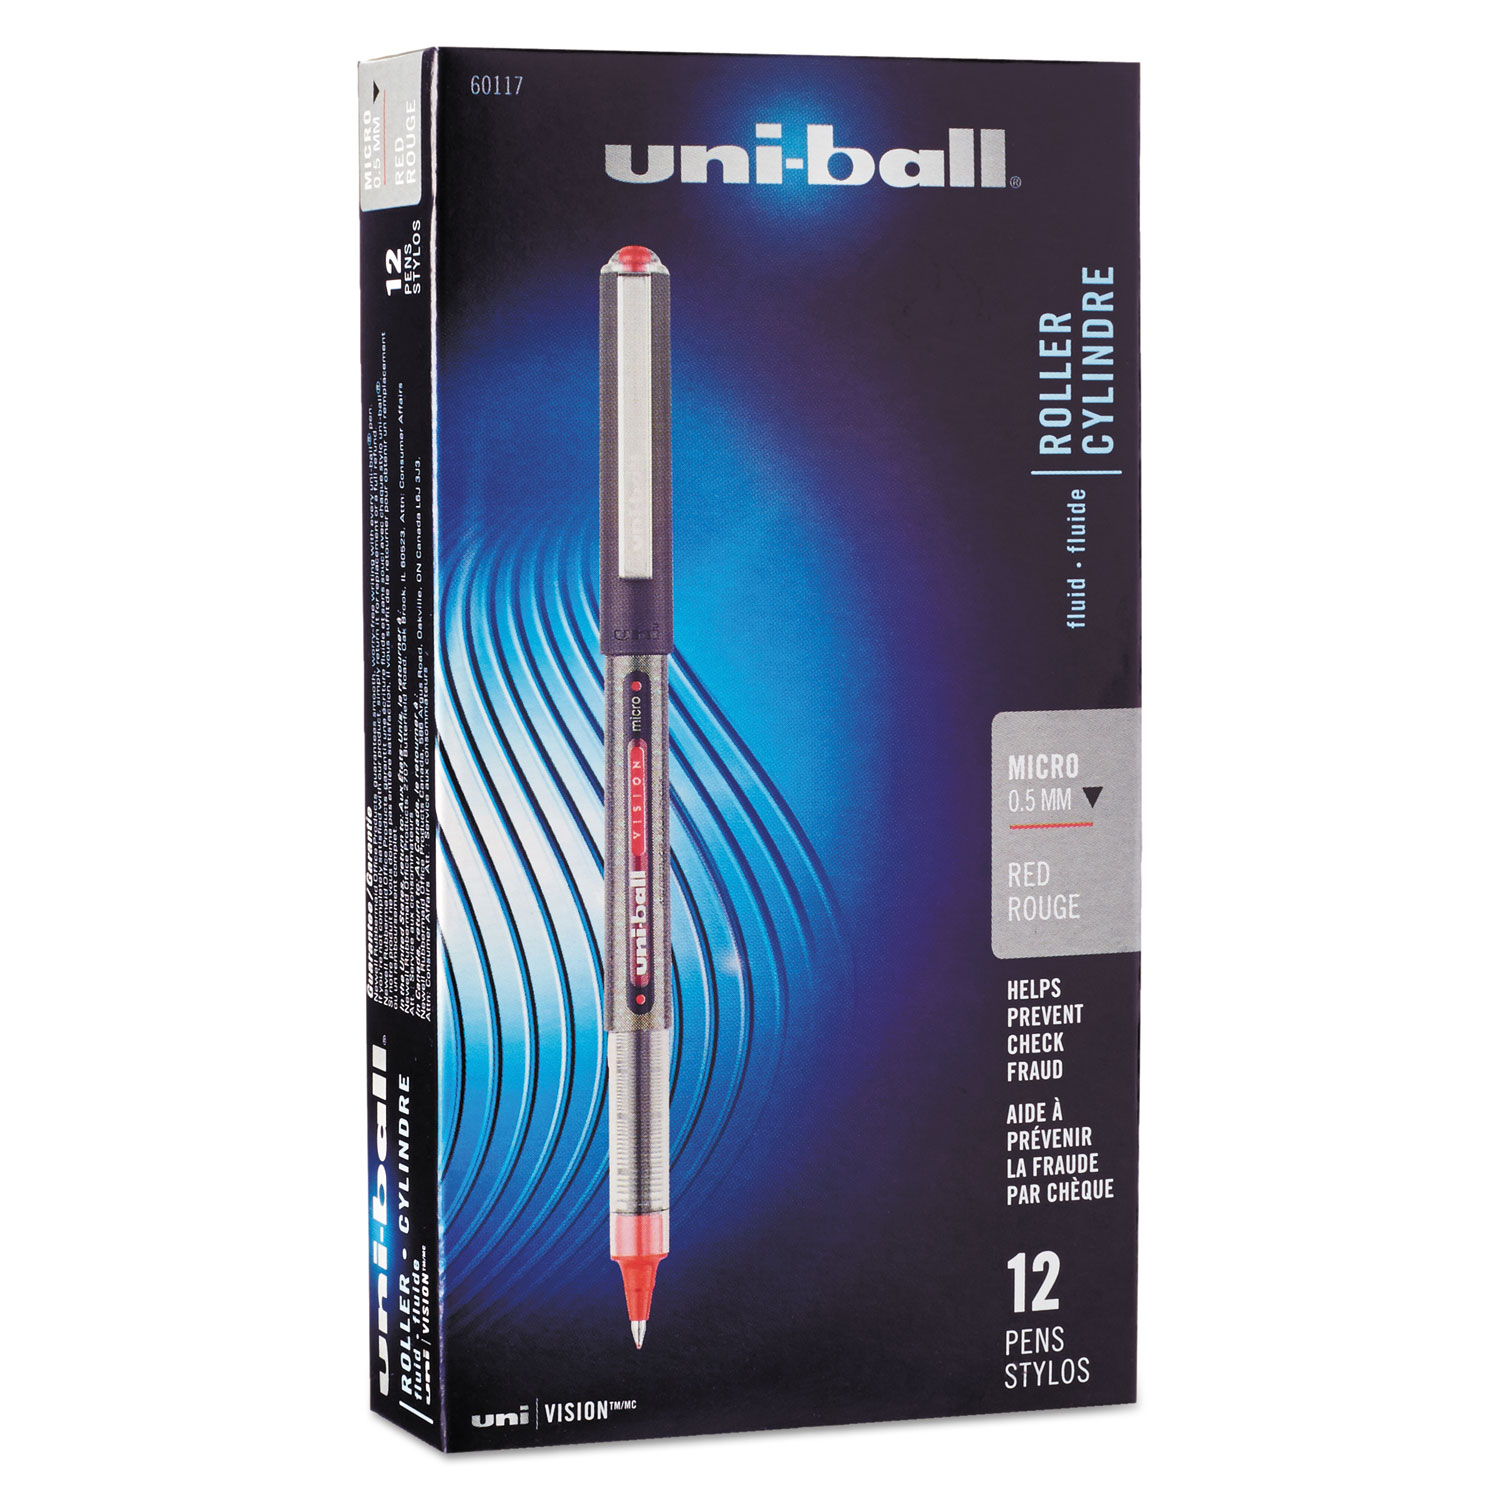  uni-ball 60117 VISION Stick Roller Ball Pen, Micro 0.5mm, Red Ink, Gray/Red Barrel, Dozen (UBC60117) 